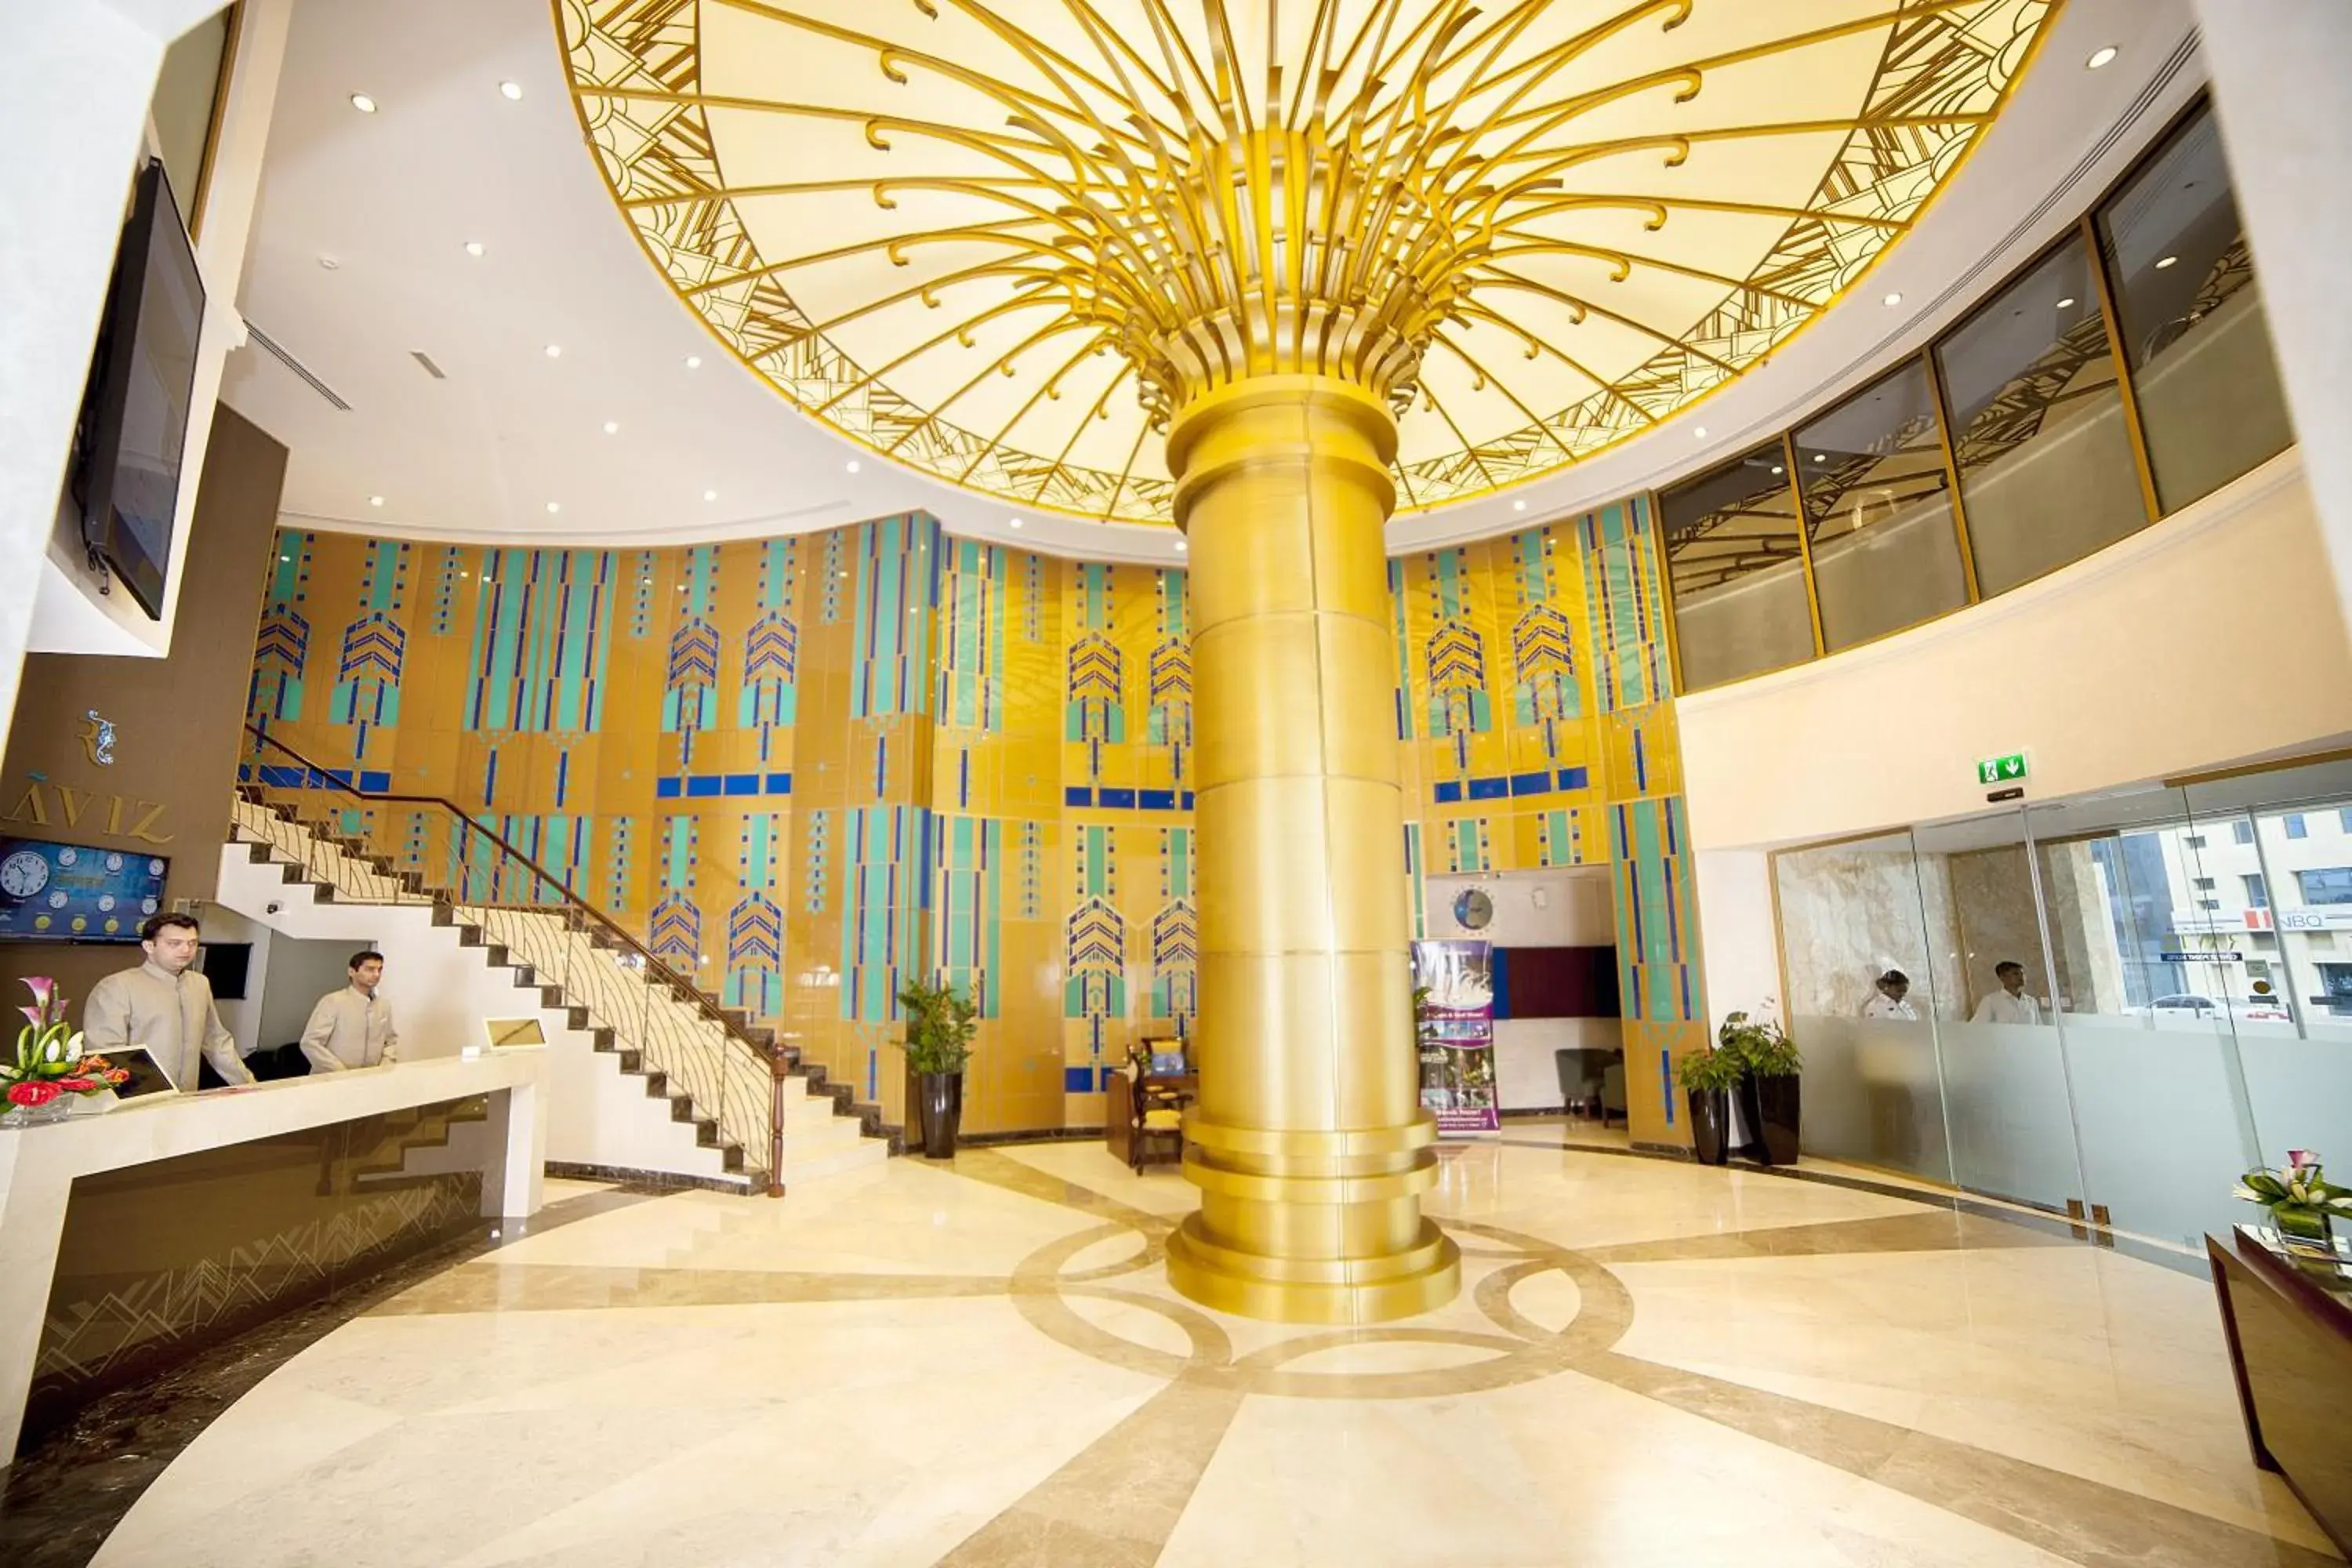 Lobby or reception, Lobby/Reception in Raviz Center Point Hotel